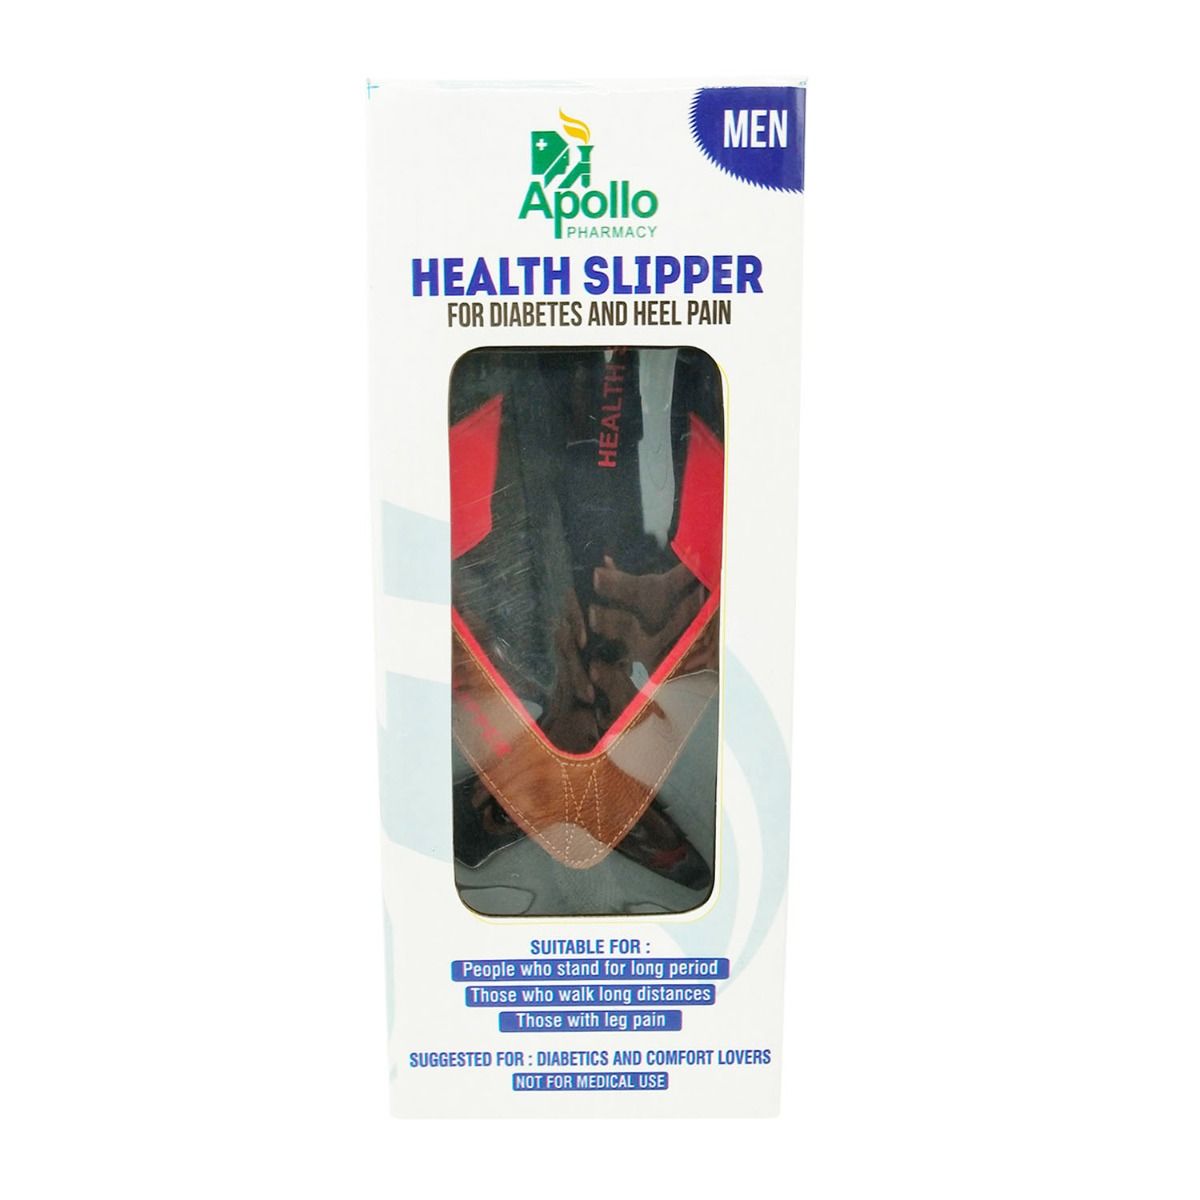 Apollo Pharmacy Diabetes & Heel Pain Health Slipper For Men, Size-10, 1 Pair, Pack of 1 